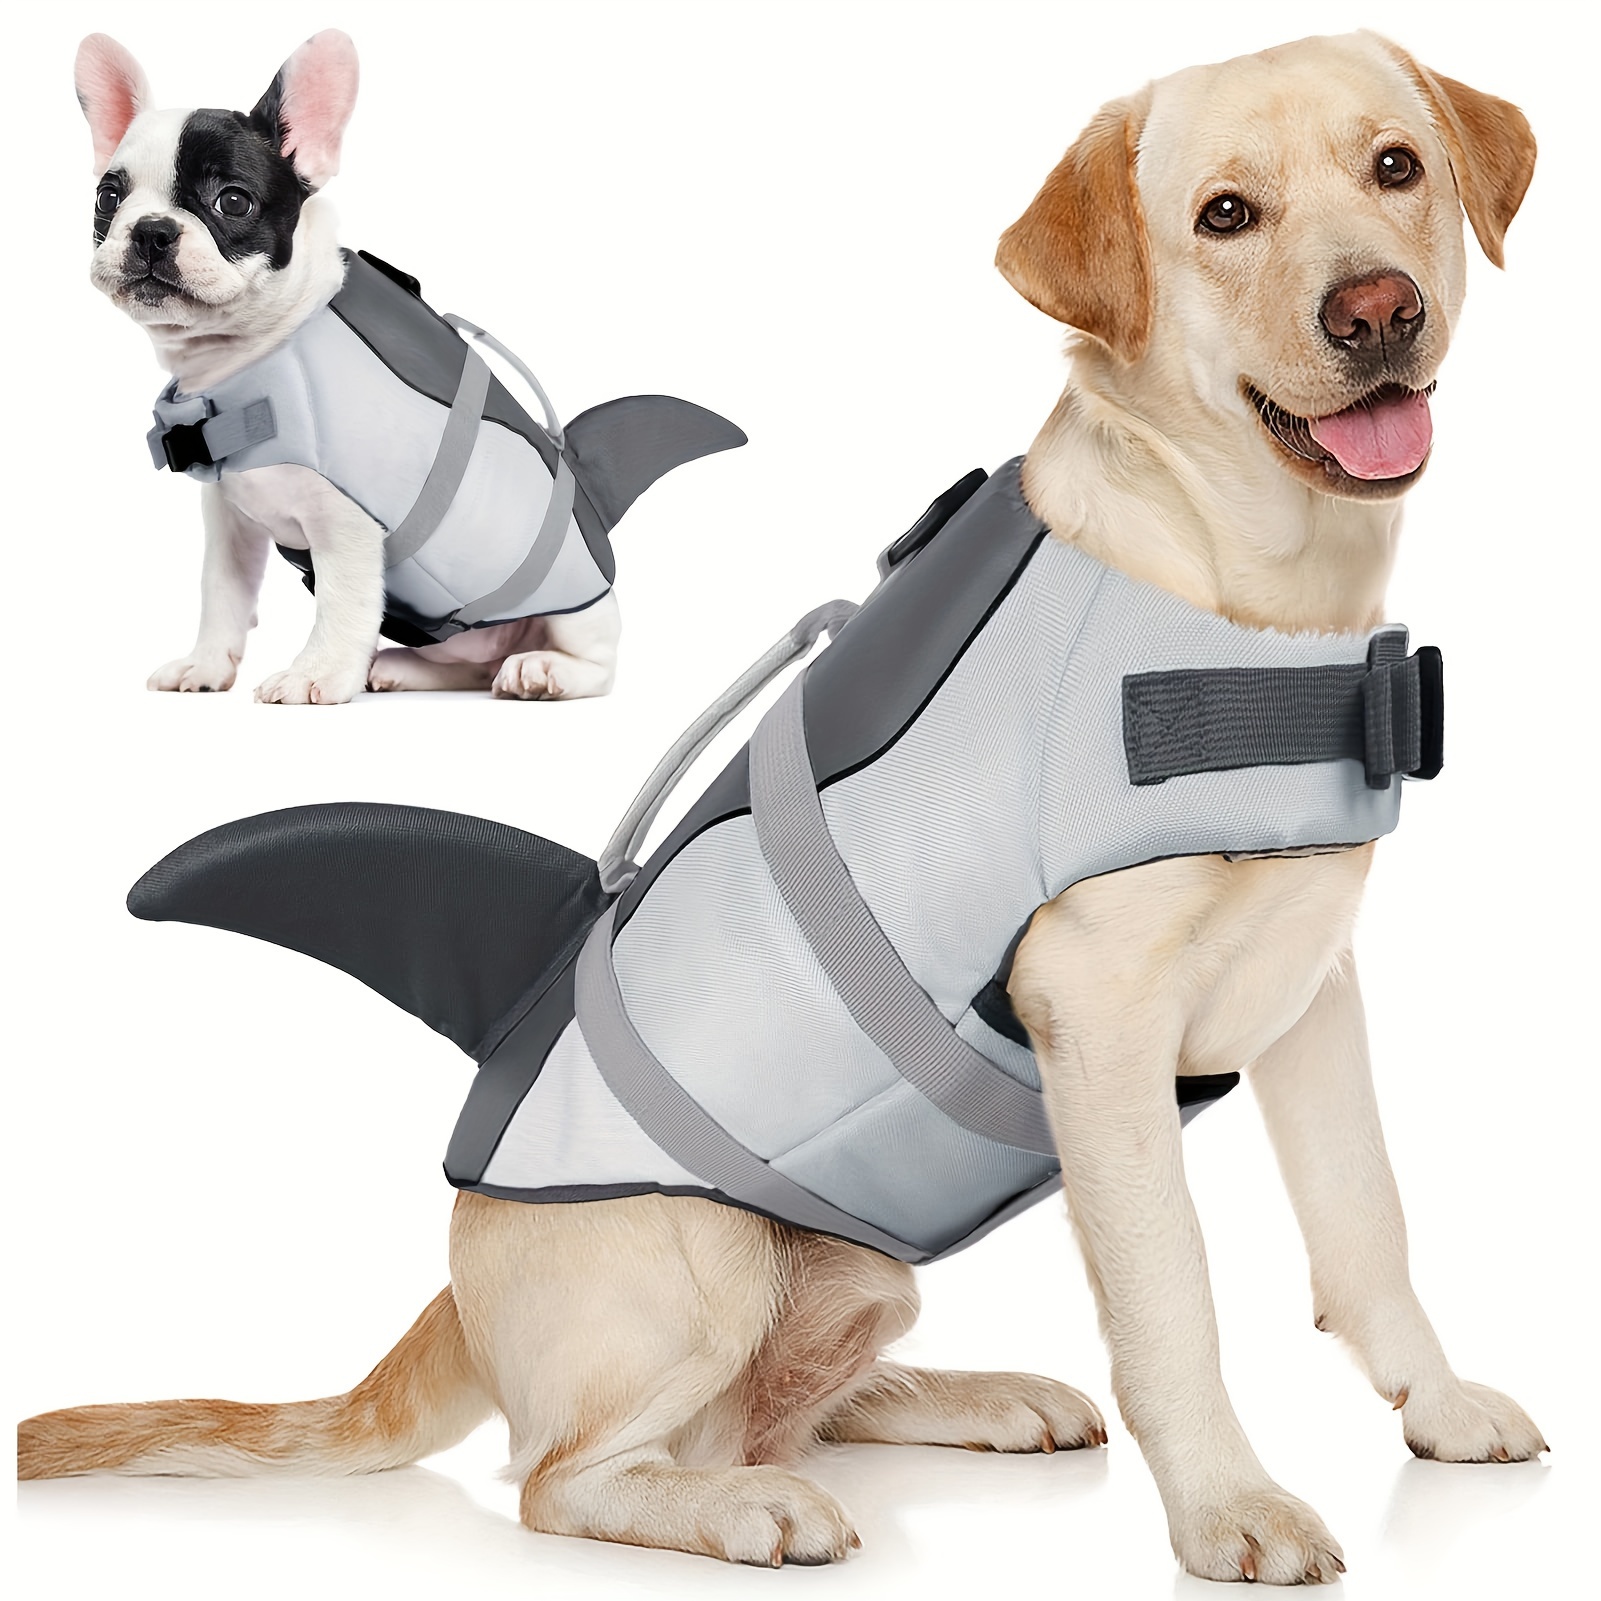 

Dog Life Jacket, Ripstop Dog Life Vest For Swimming, Dog Safety Vest, Reflective Dog Lifesaver With Superior Buoyancy And Rescue Handle, Dog Float Coat For Small Medium Large Dogs